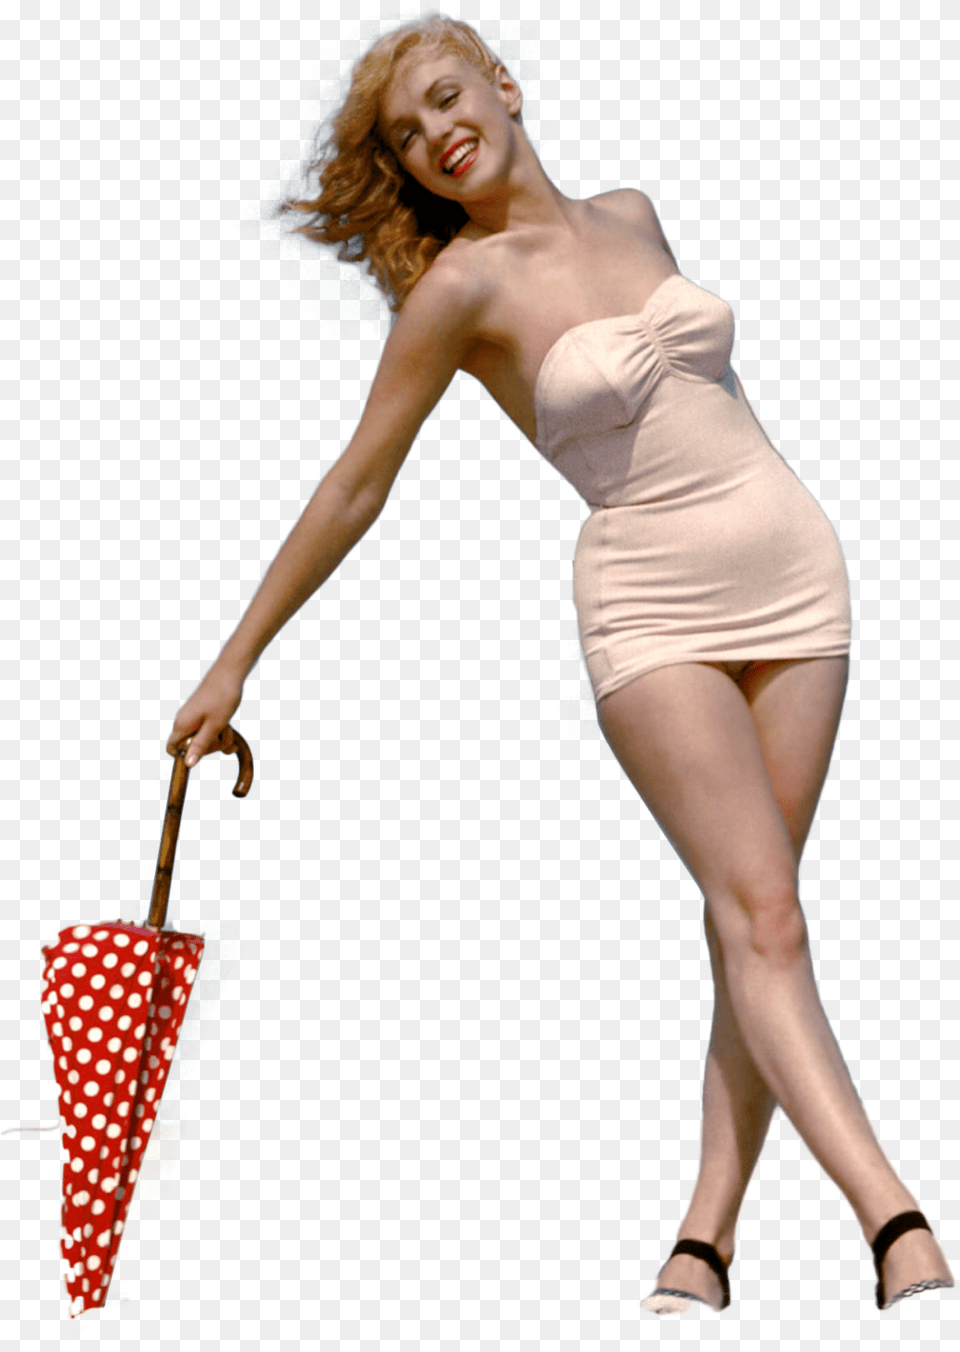 Merilin Monro Marilyn Monroe Swimsuits, Accessories, Person, Handbag, Woman Png Image